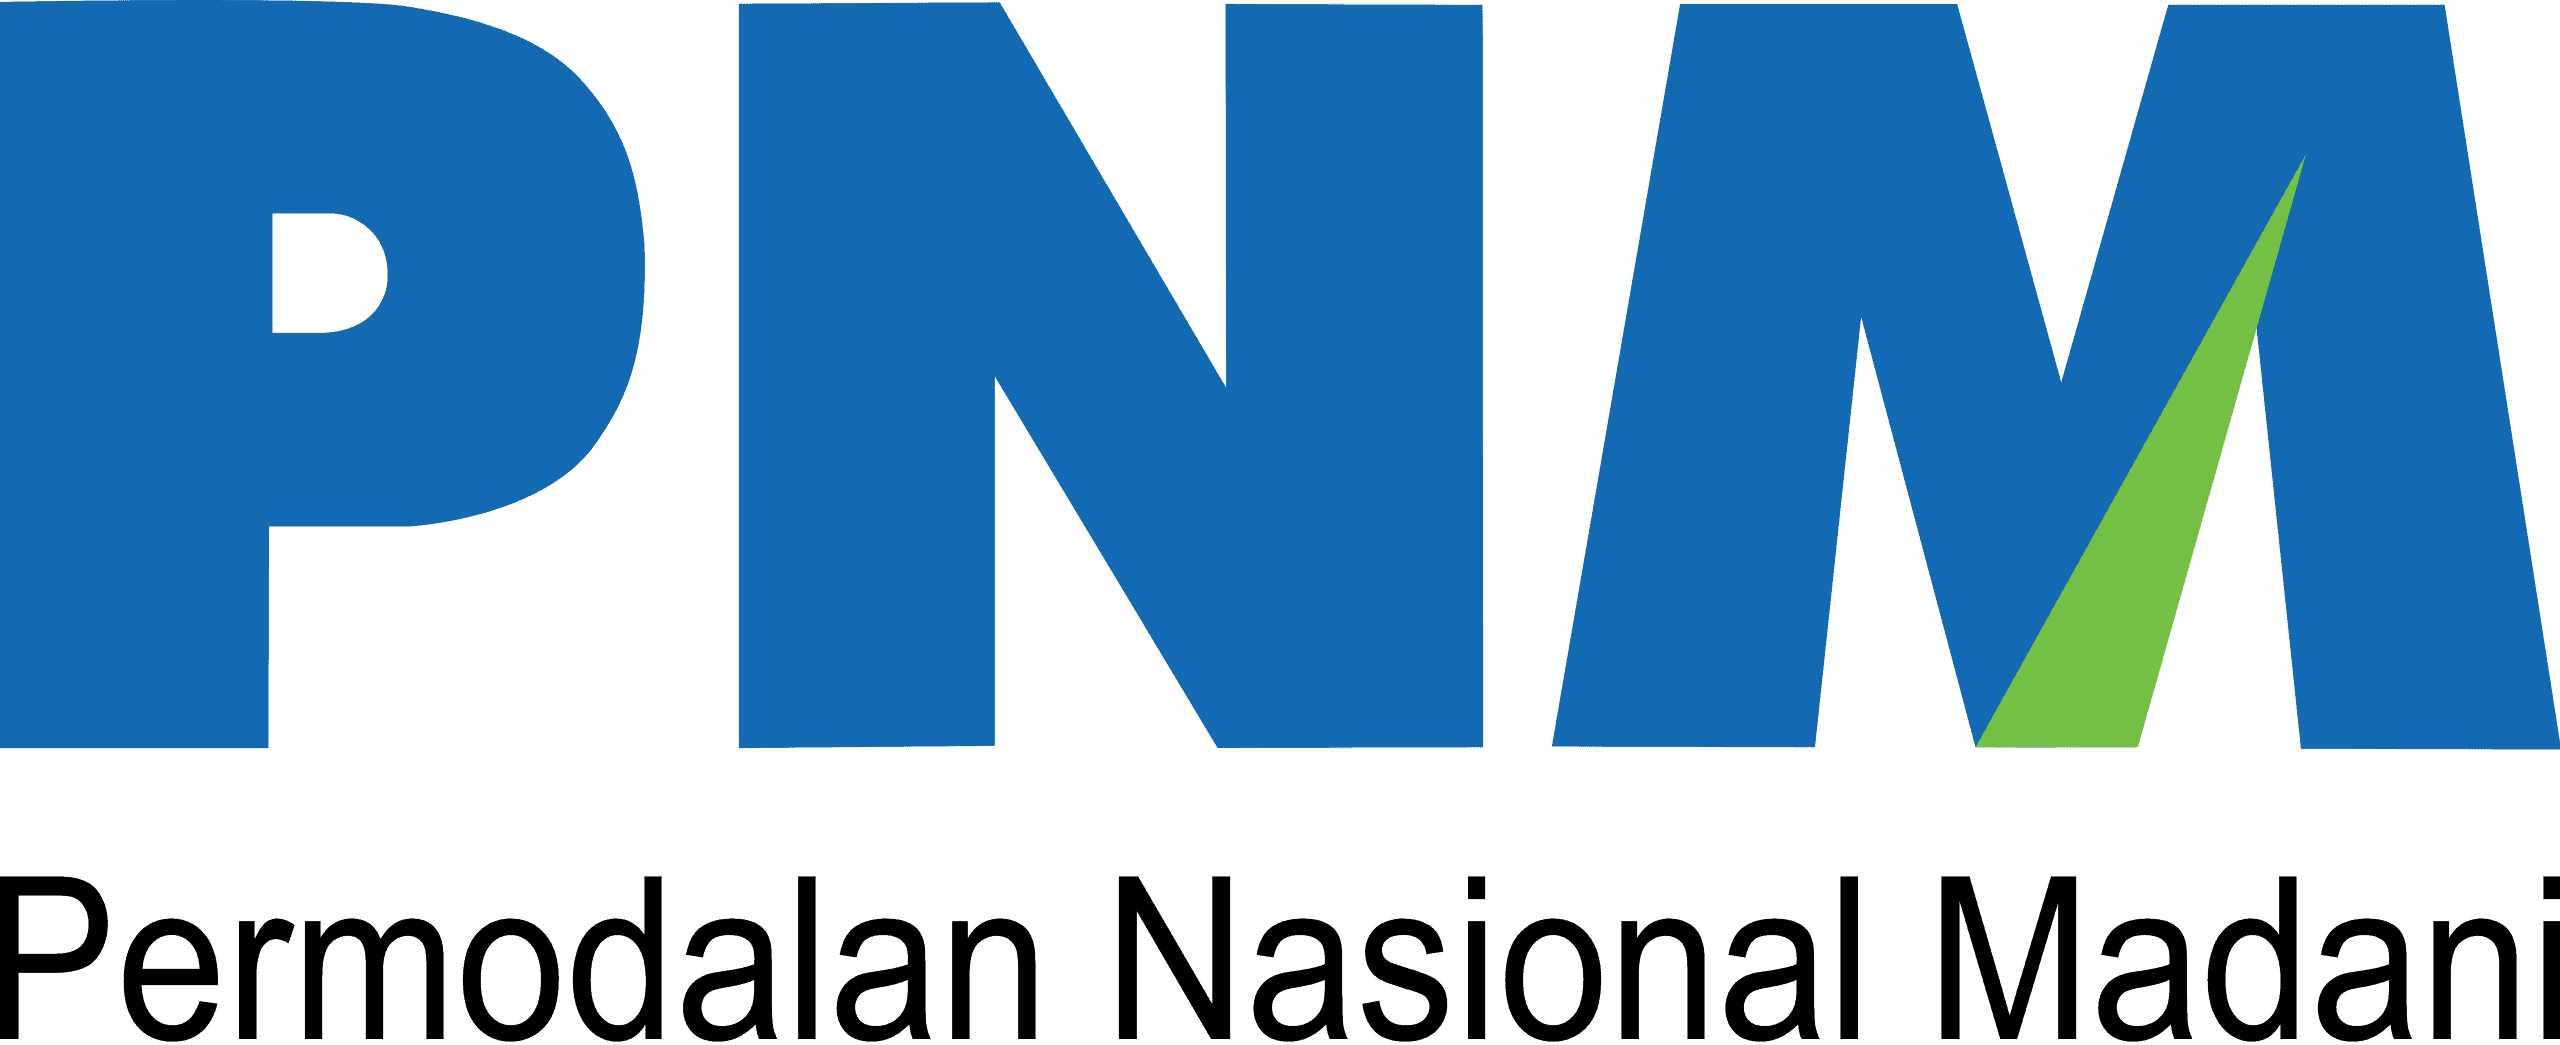 PNM_logo.svg